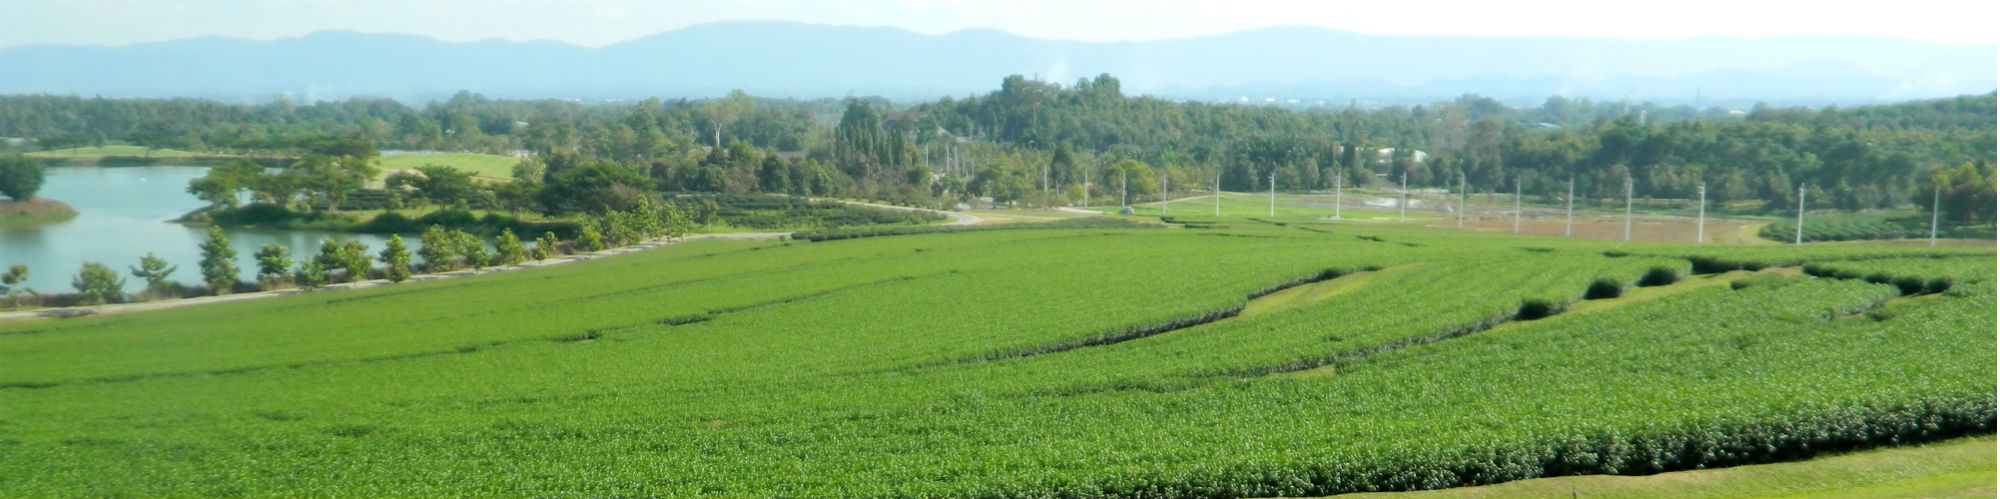 Tea Plantation at Singha Park, near Chiang Rai